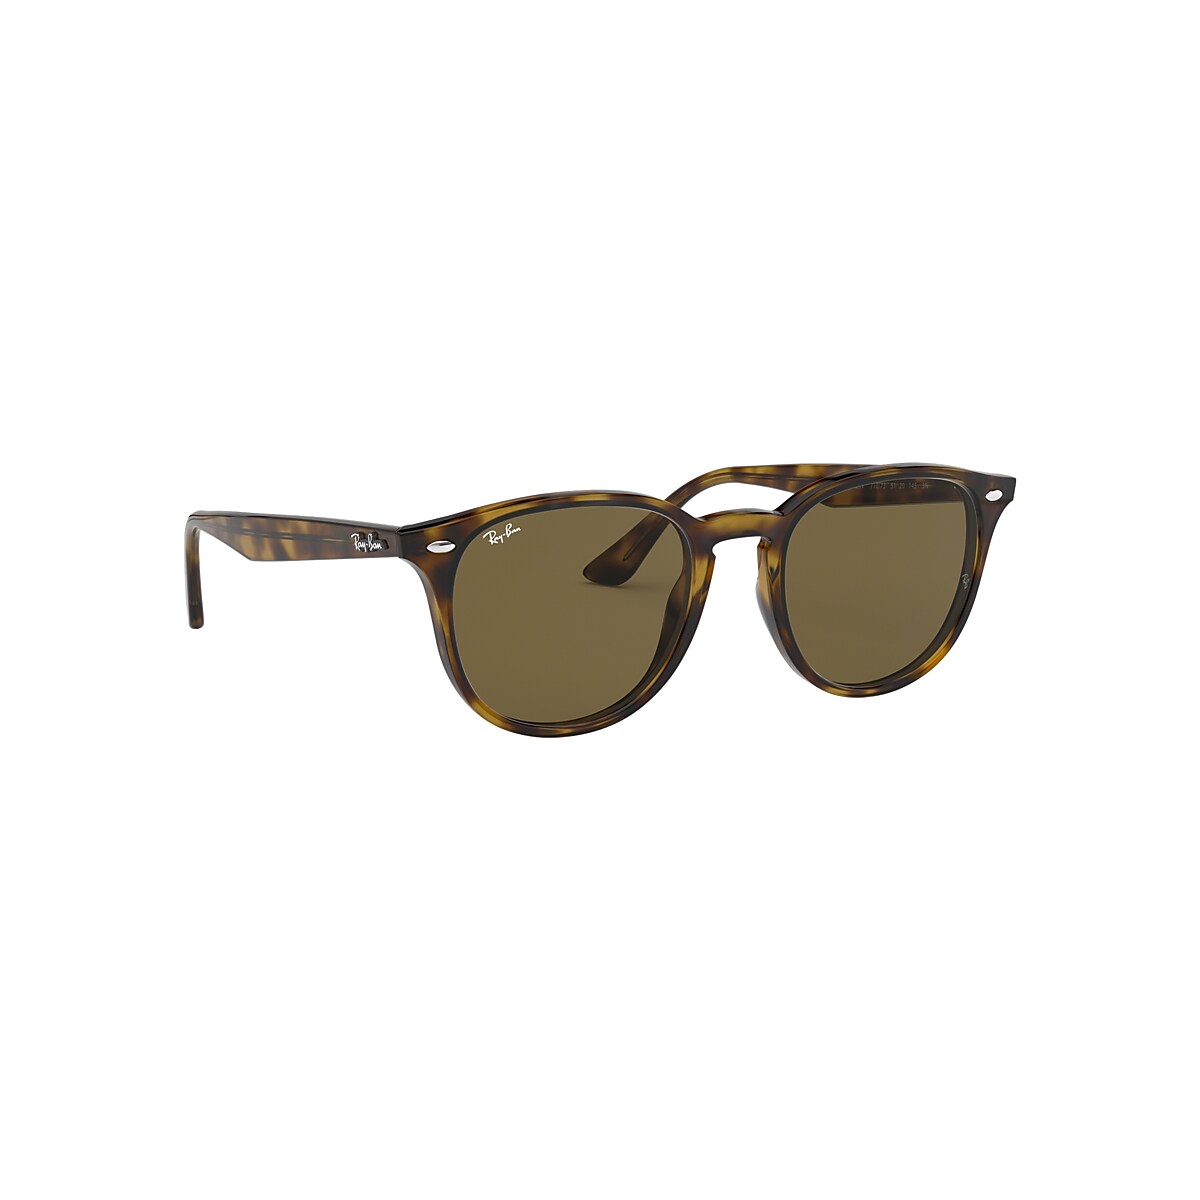 Rb4259 Sunglasses in Light Havana and Dark Brown | Ray-Ban®